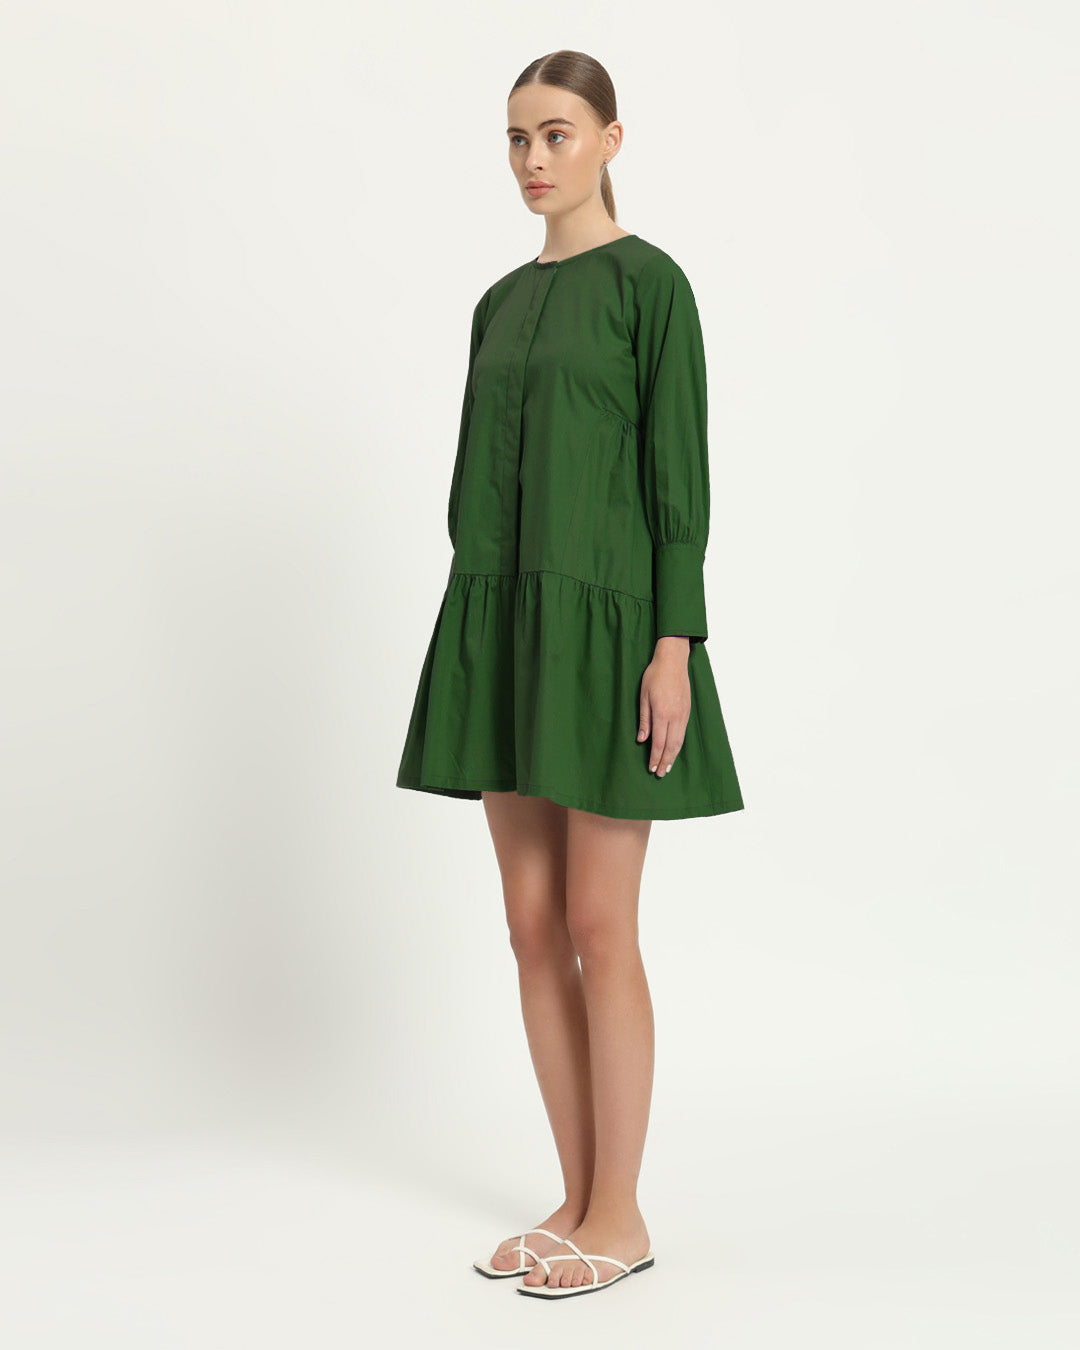 The Brandis Emerald Cotton Dress